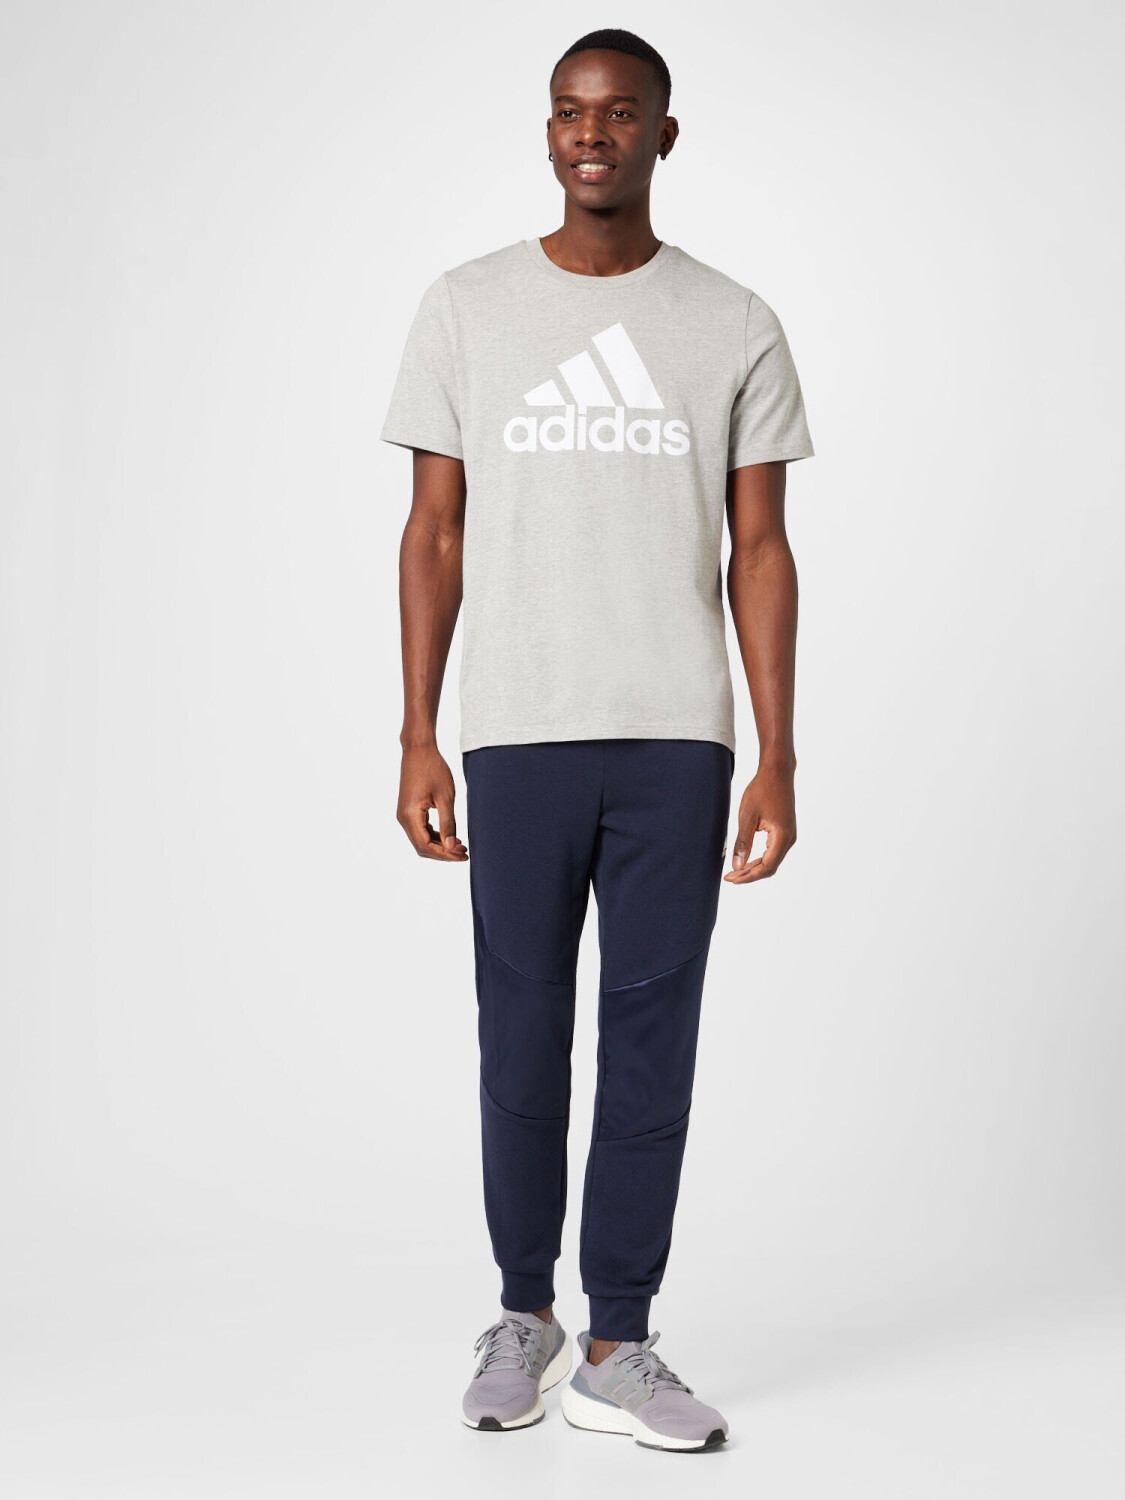 Jersey Single heather 16,77 ab T-Shirt (IC9350) grey Big Preisvergleich | Essentials € medium bei Logo Adidas